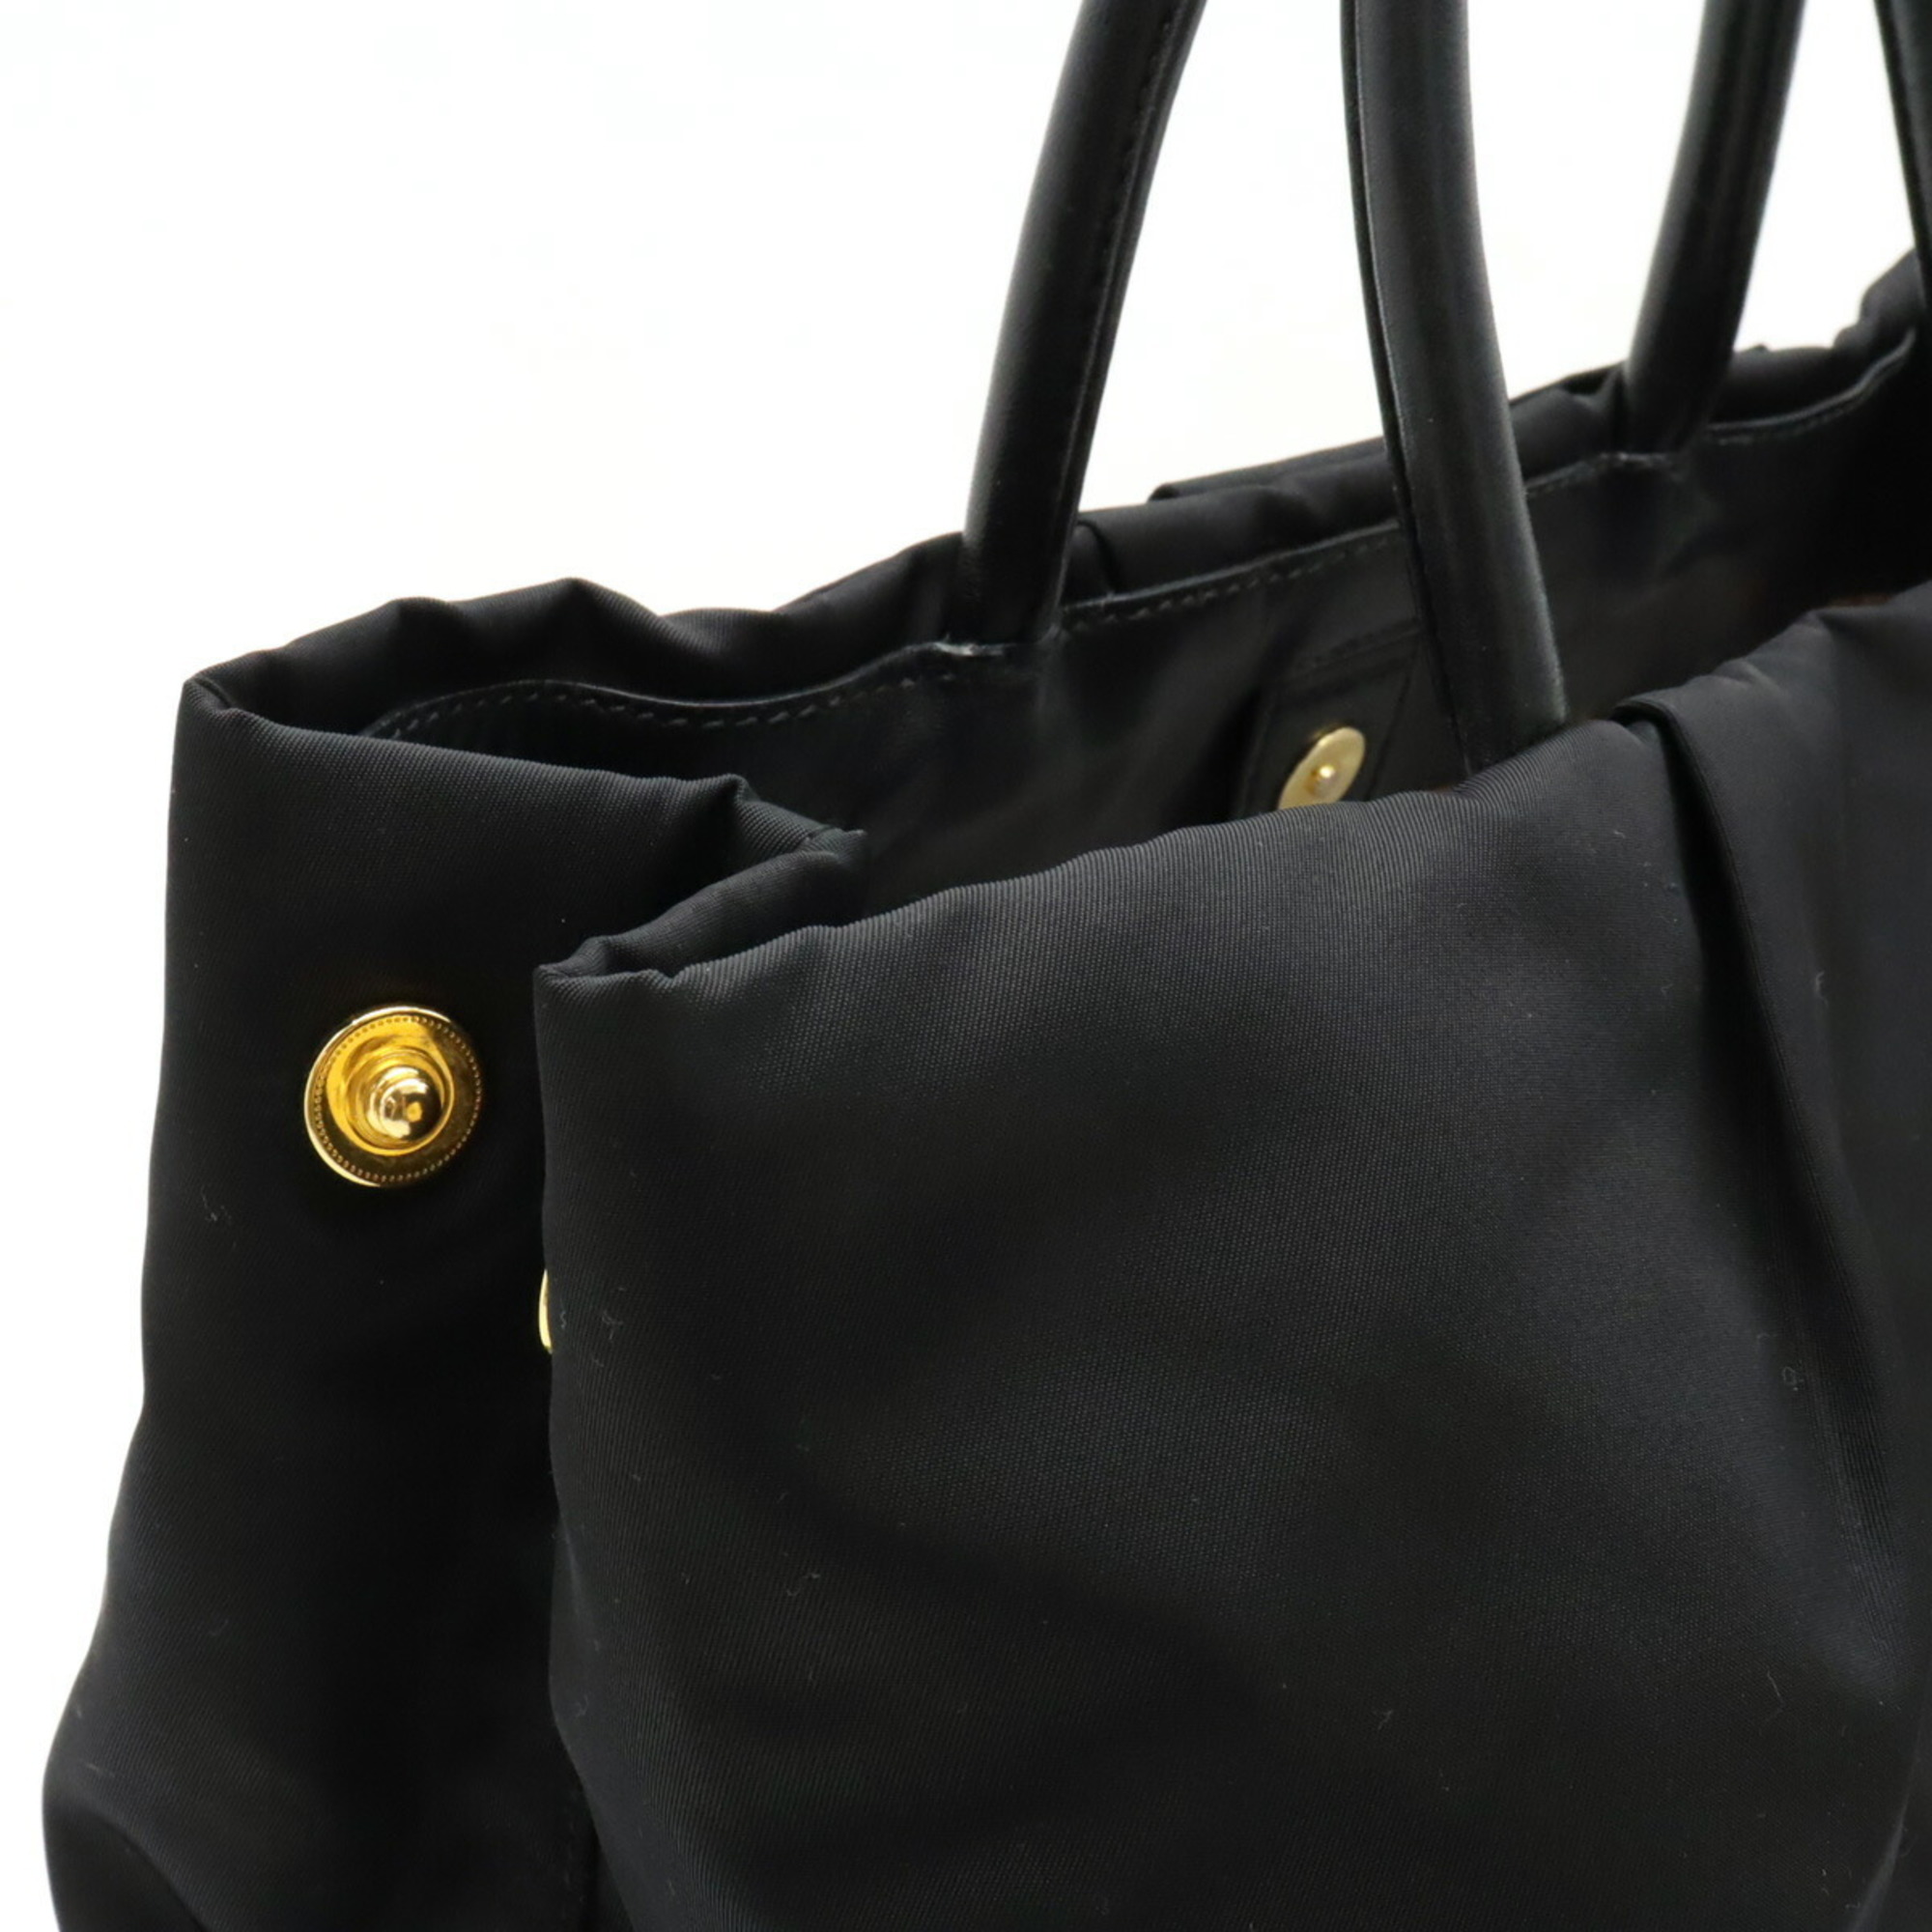 PRADA Prada tote bag handbag ribbon leather NERO black BN1601